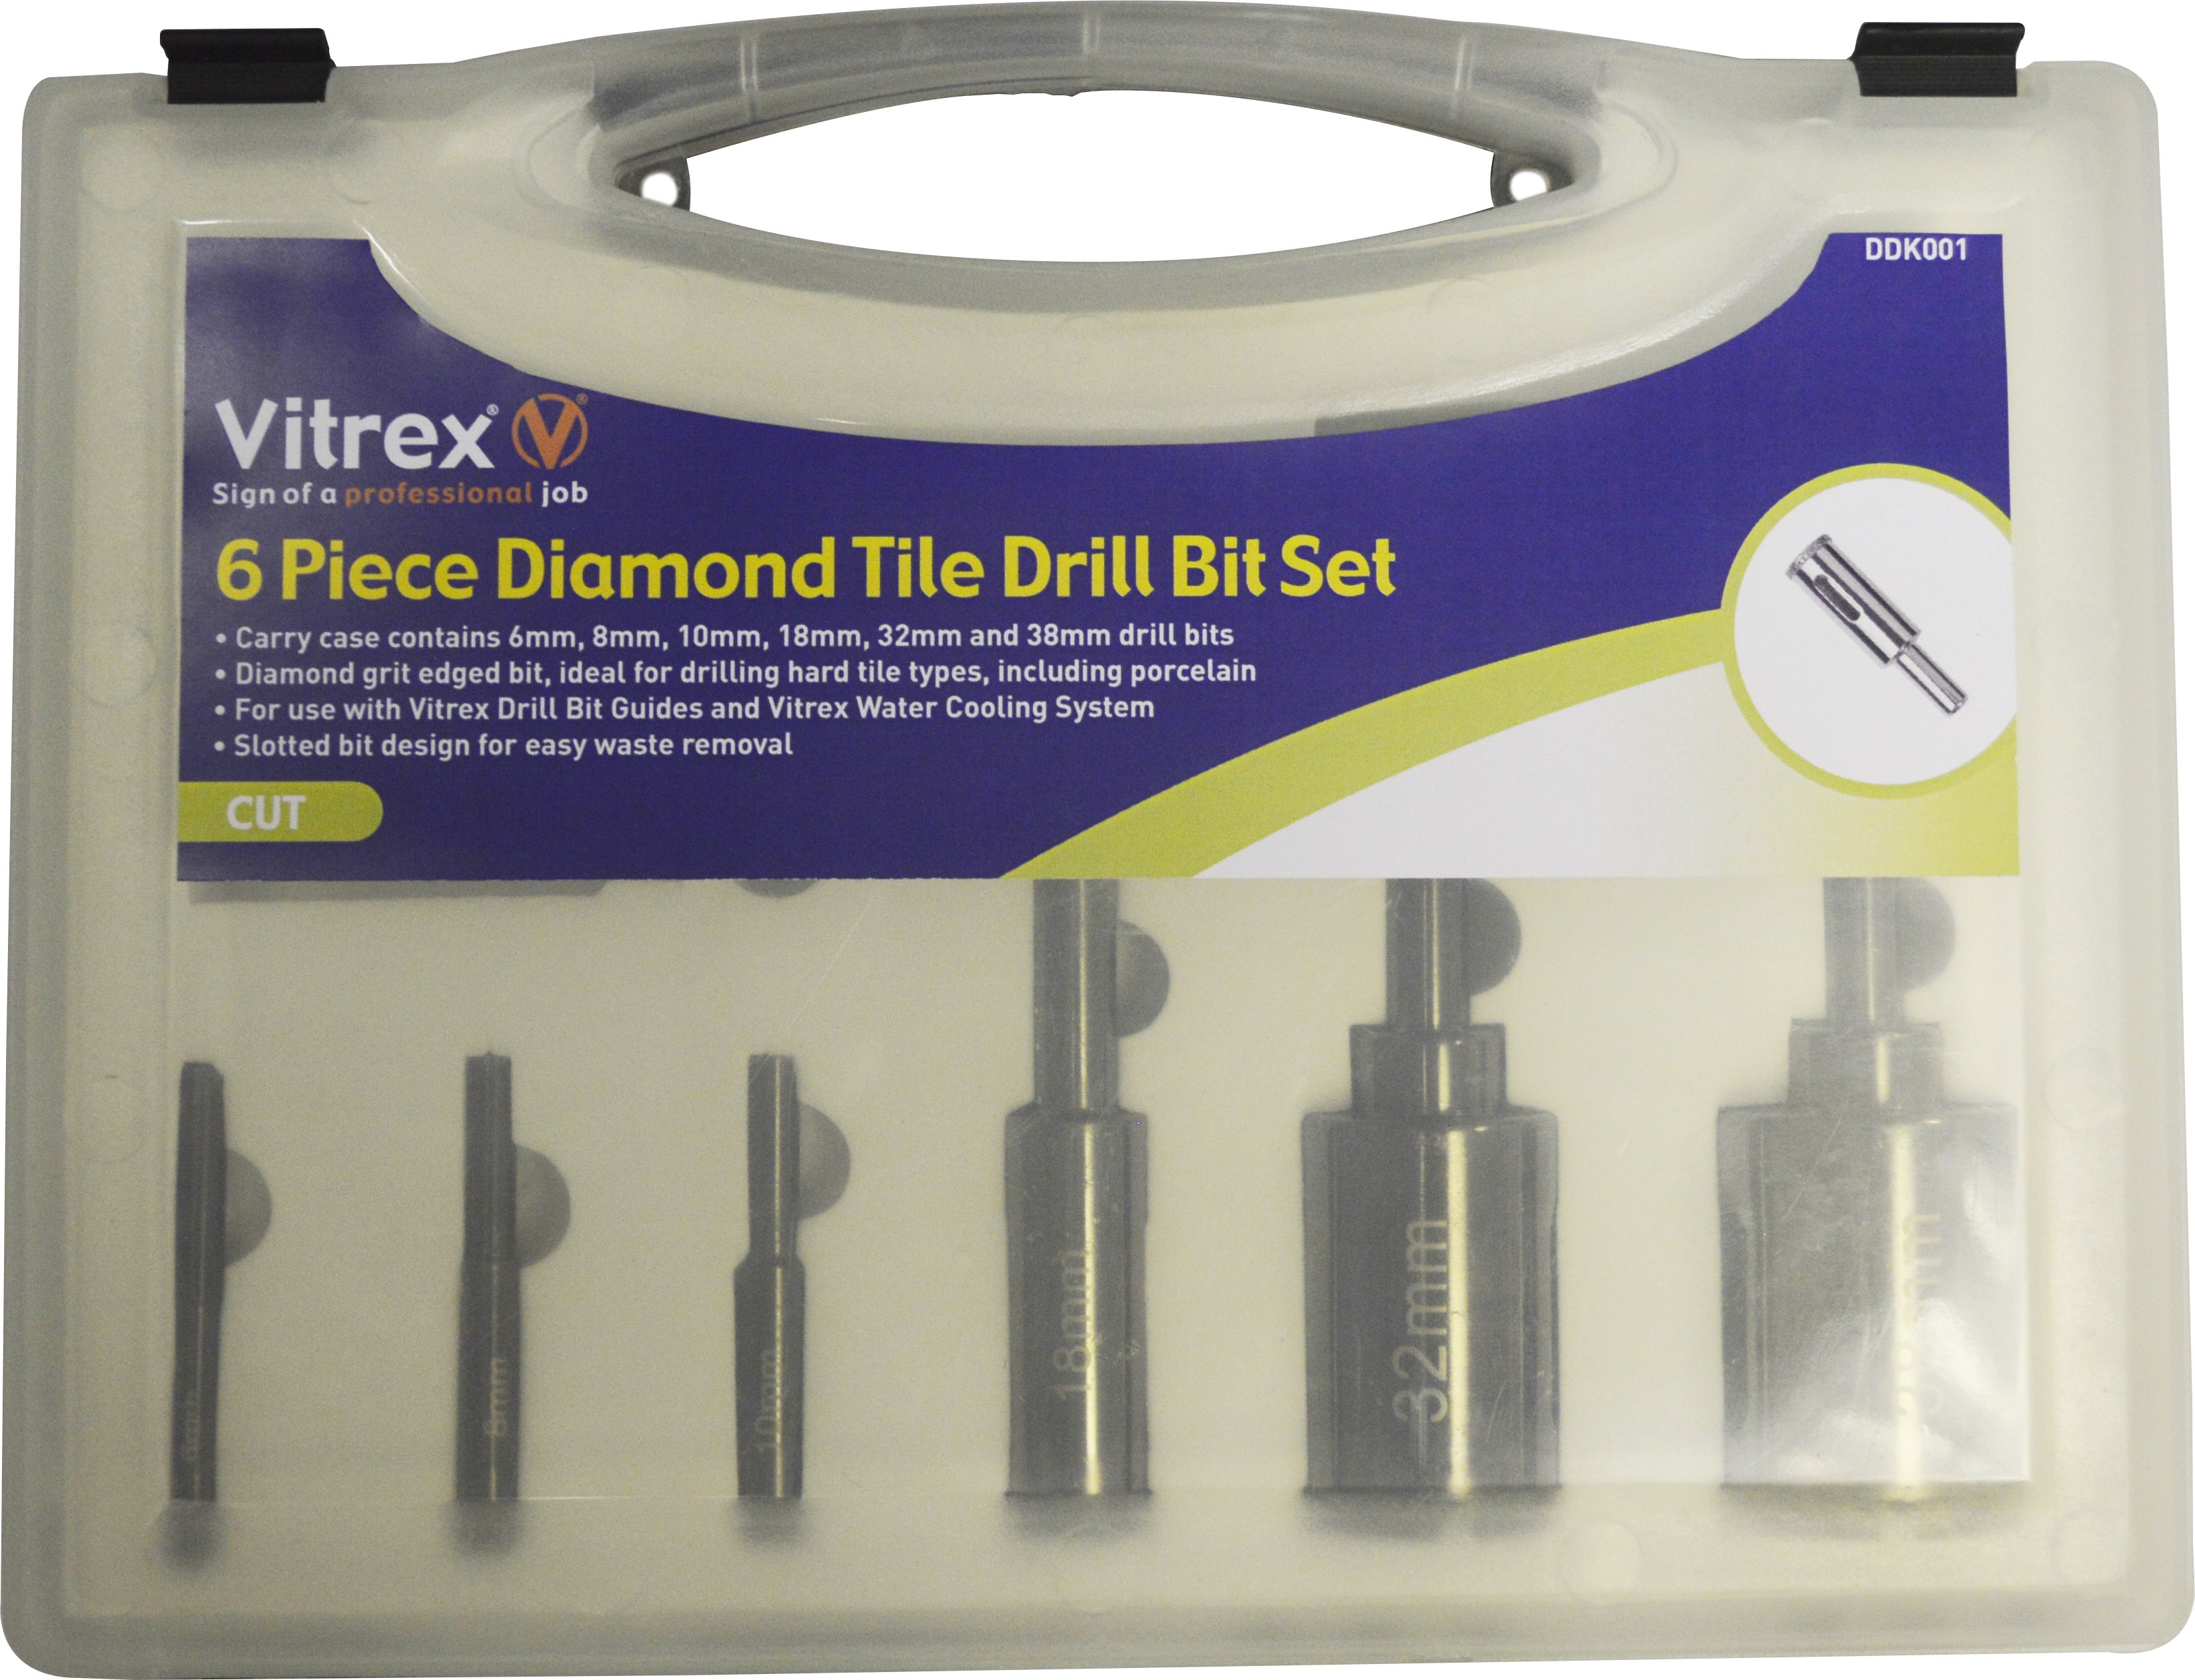 6 Piece Diamond Tile Drill Bit Set